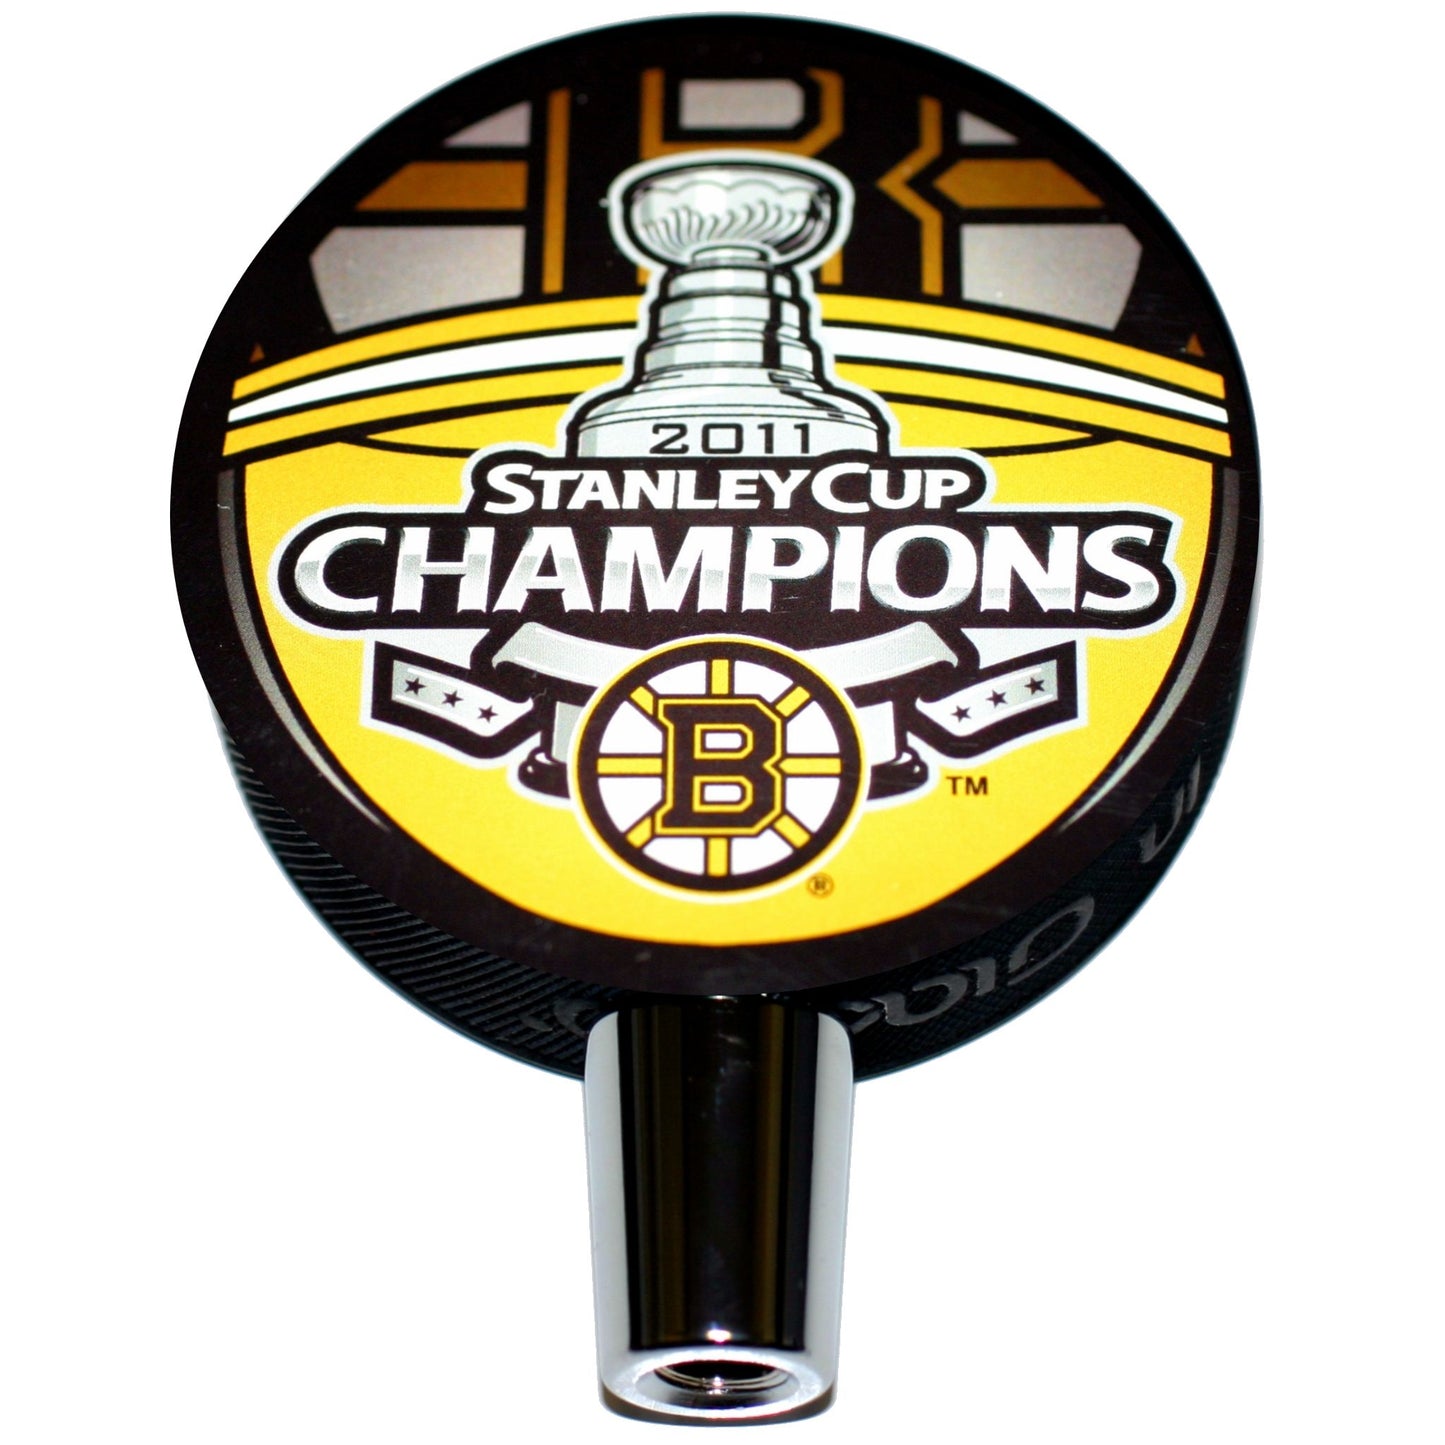 Boston Bruins 2011 Stanley Cup Champions Hockey Puck Beer Tap Handle